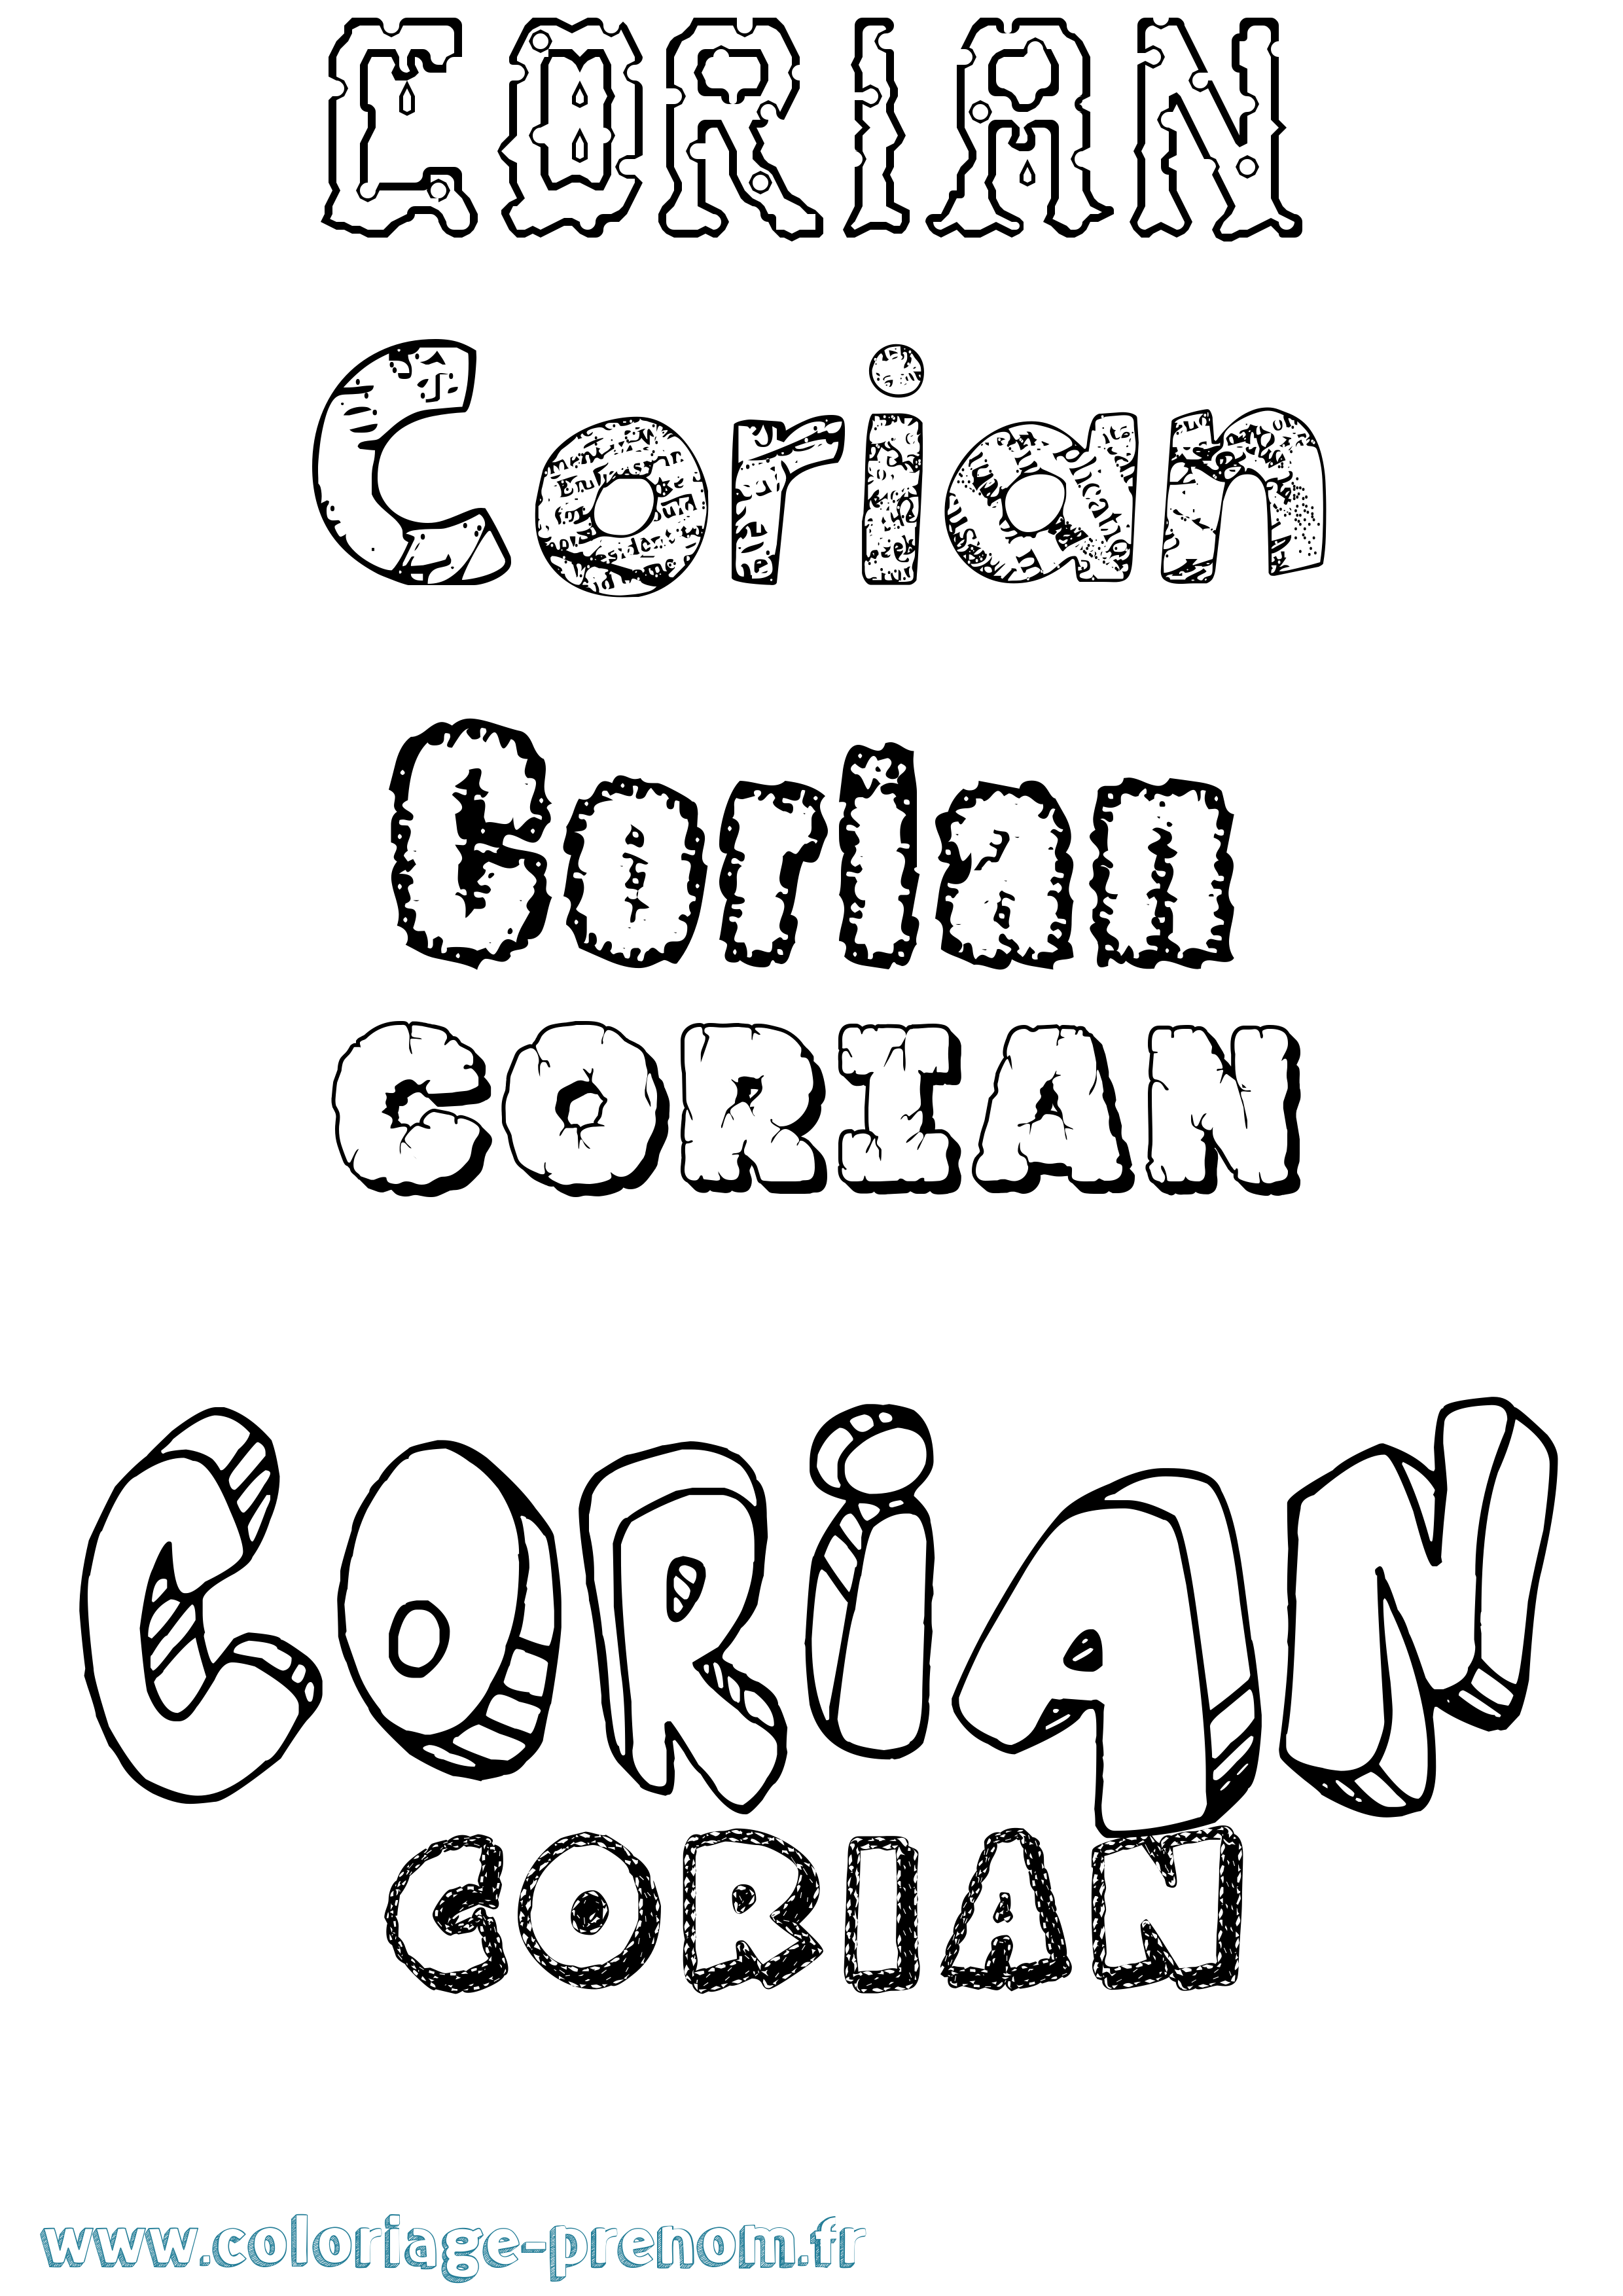 Coloriage prénom Corian Destructuré